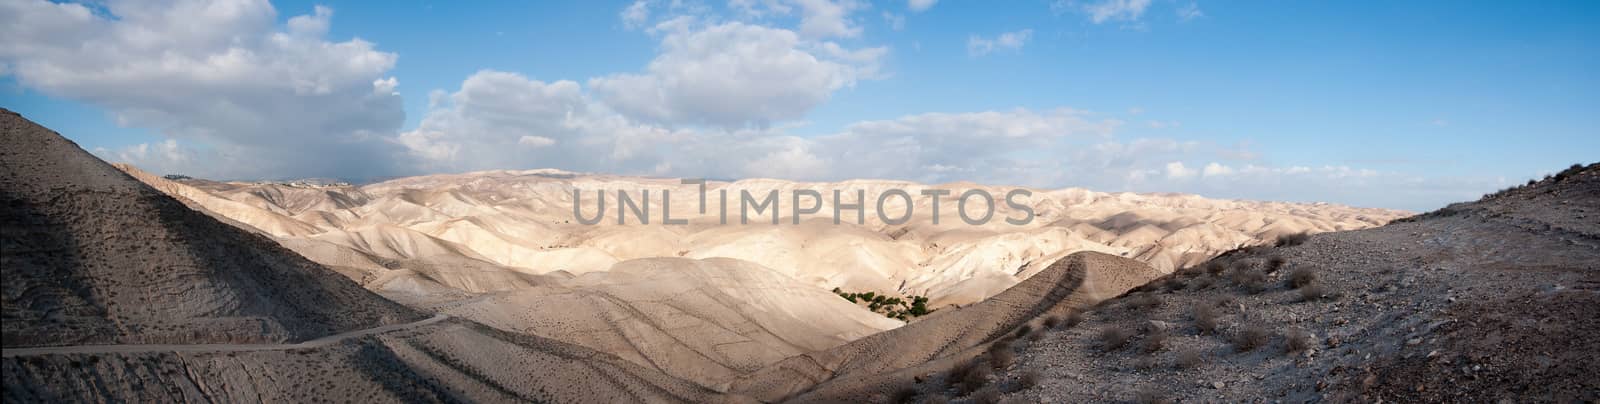 Christian travel in judean desert panorama by javax